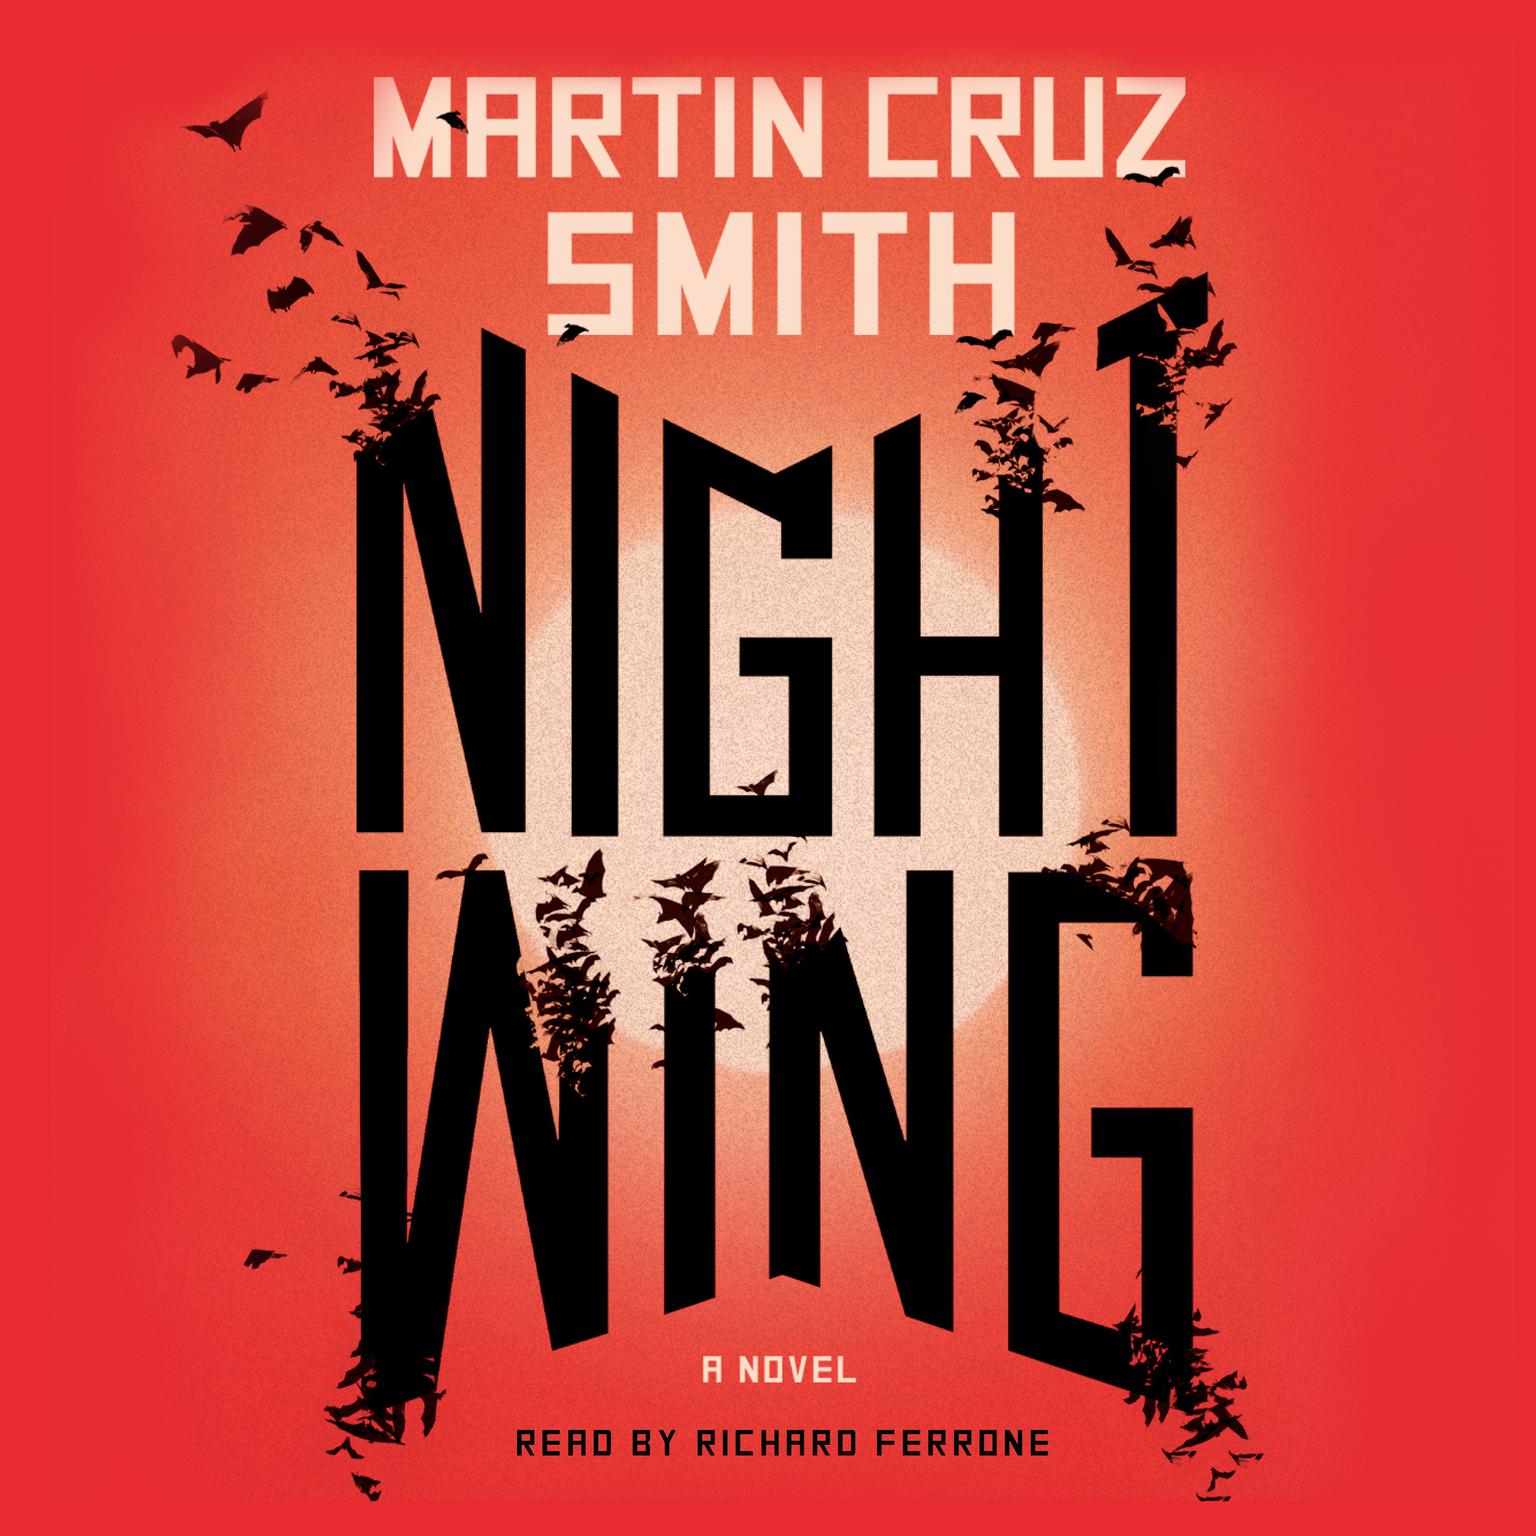 Nightwing Audiobook, by Martin Cruz Smith